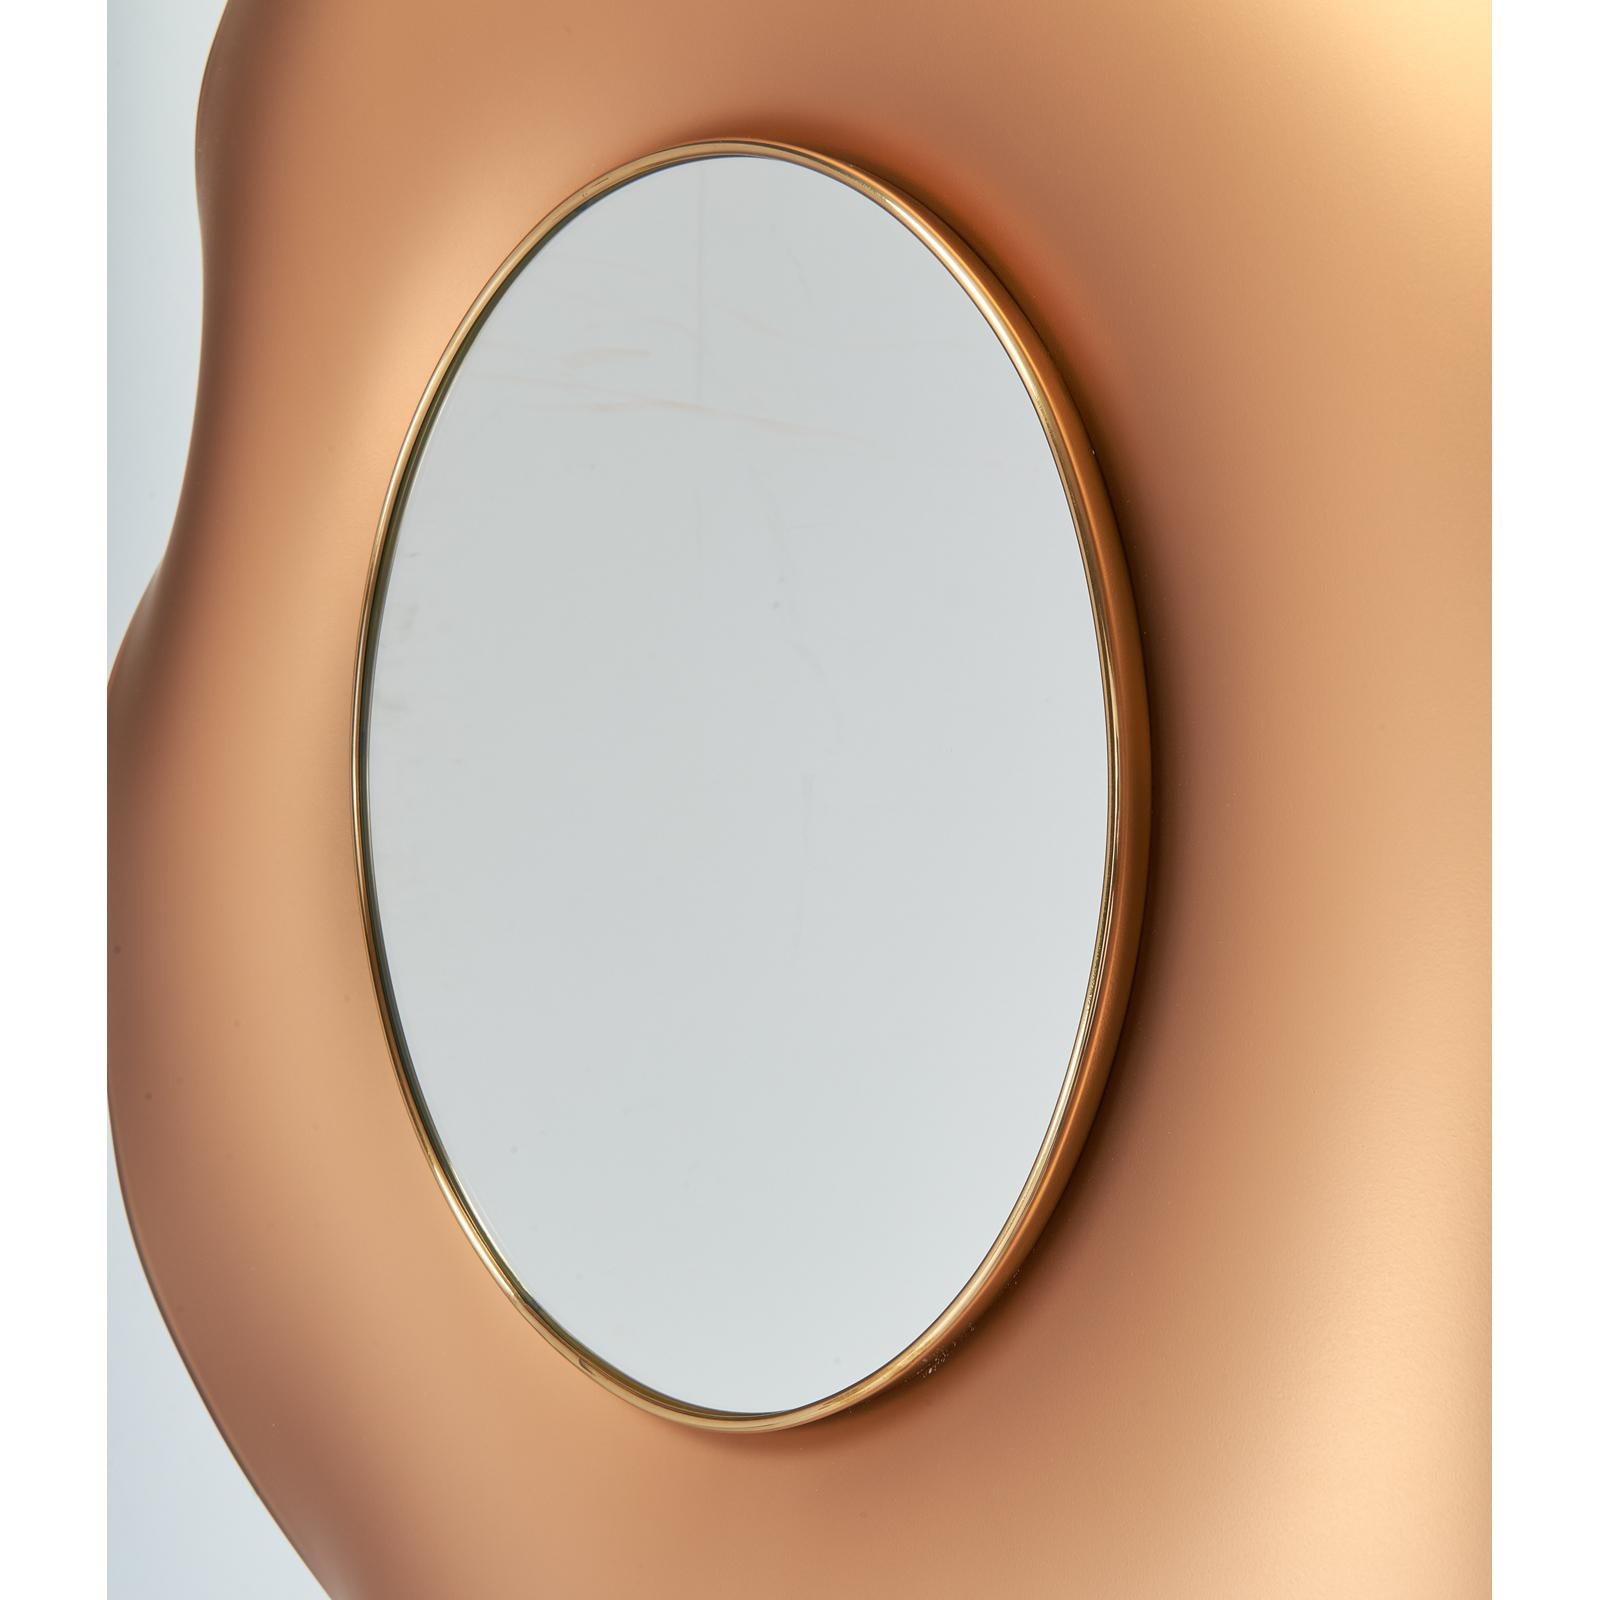 Italian Ghiro Studio Undulating Mirror in Solid Colored Glass, 2018 For Sale